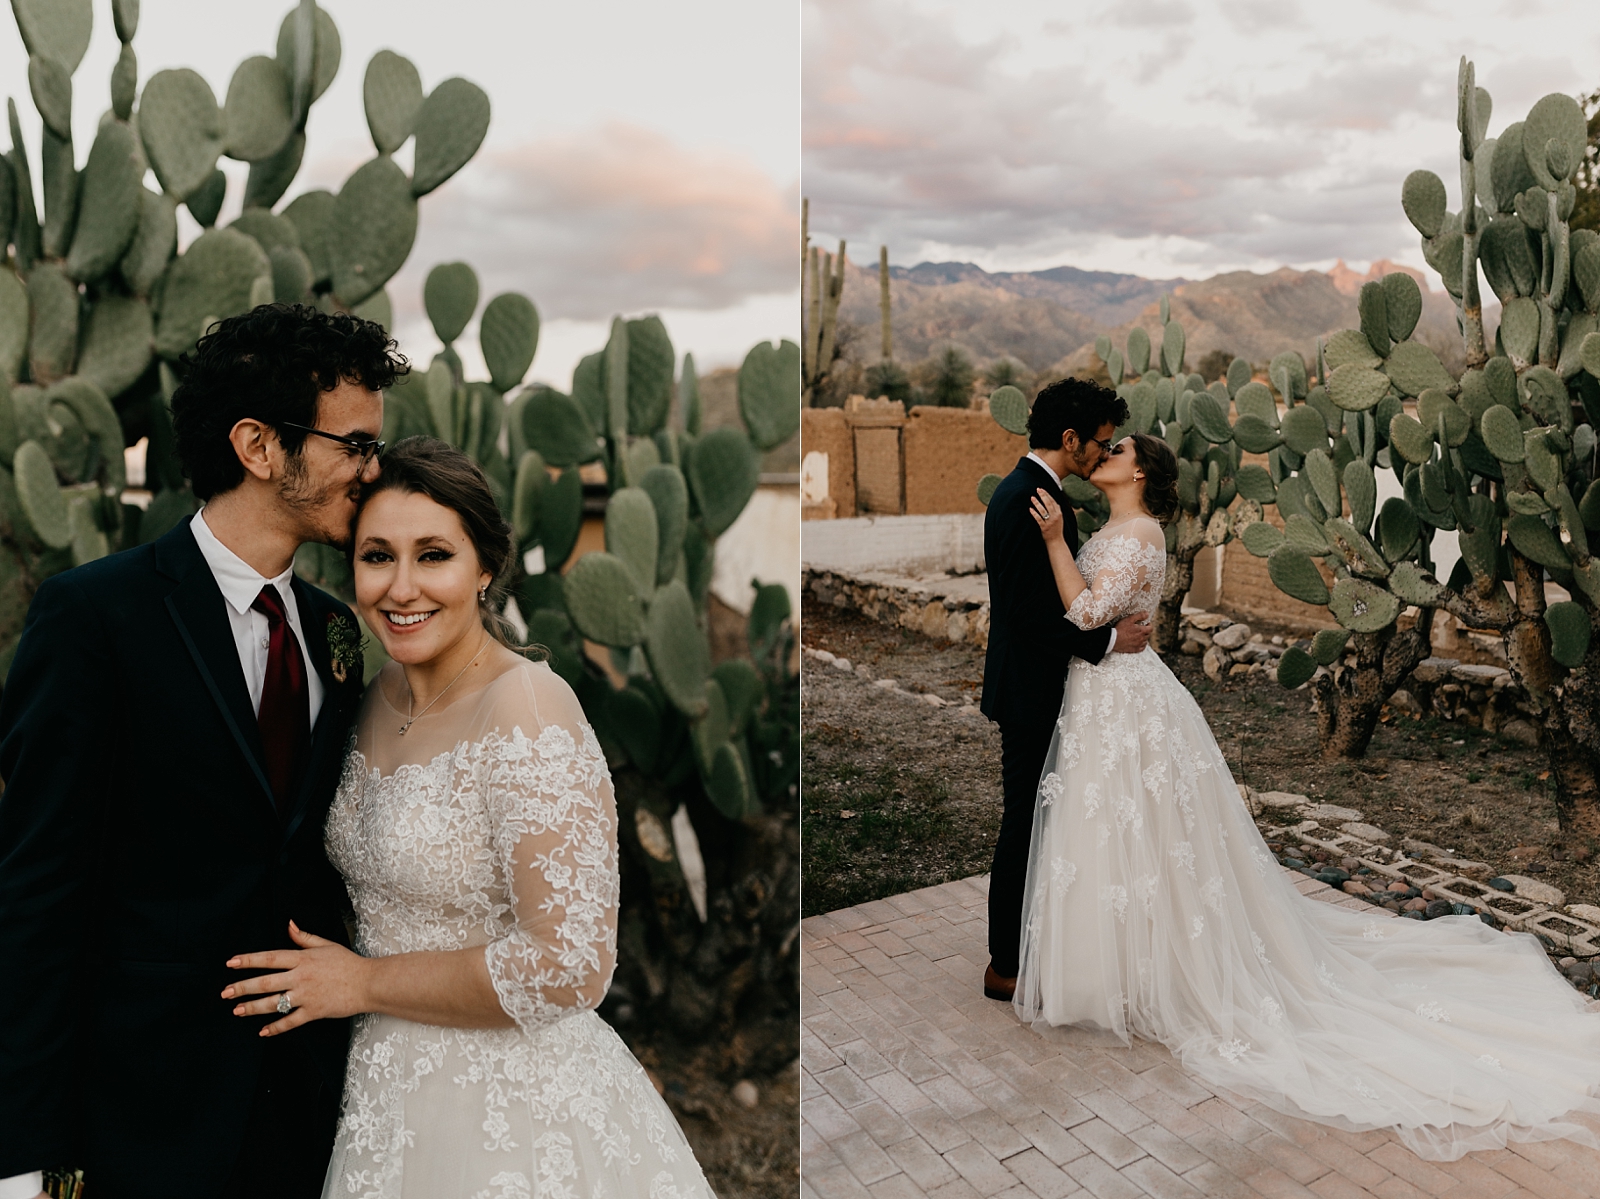 Corona Ranch Wedding Photos Tucson Arizona photographer Samantha Patri